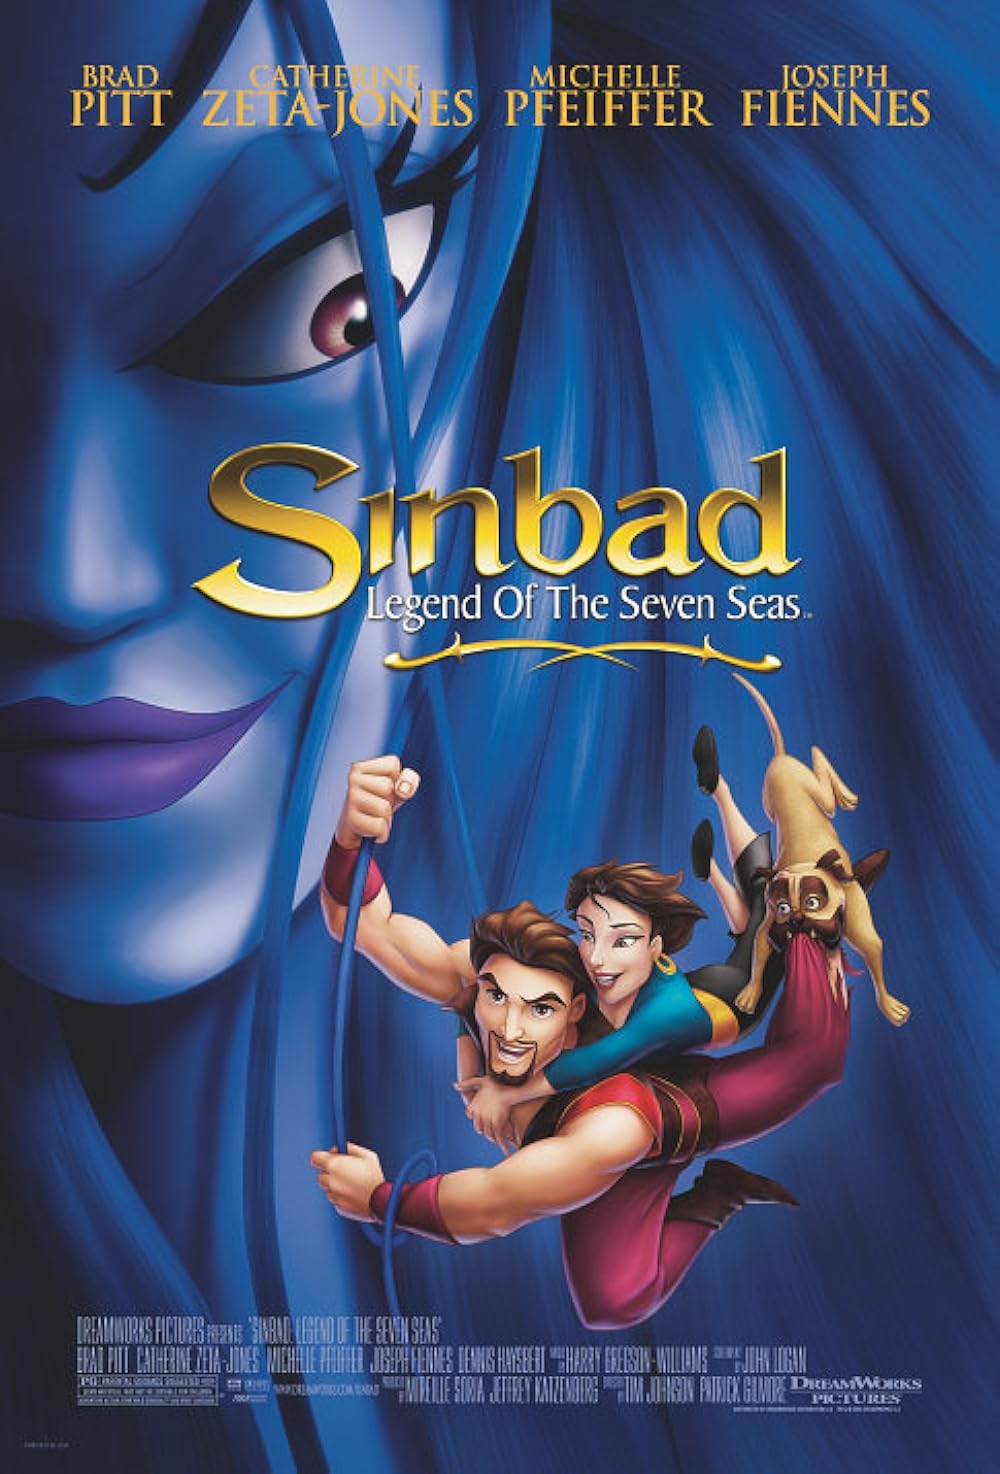 FULL MOVIE: Sinbad: Legend of the Seven Seas (2003)